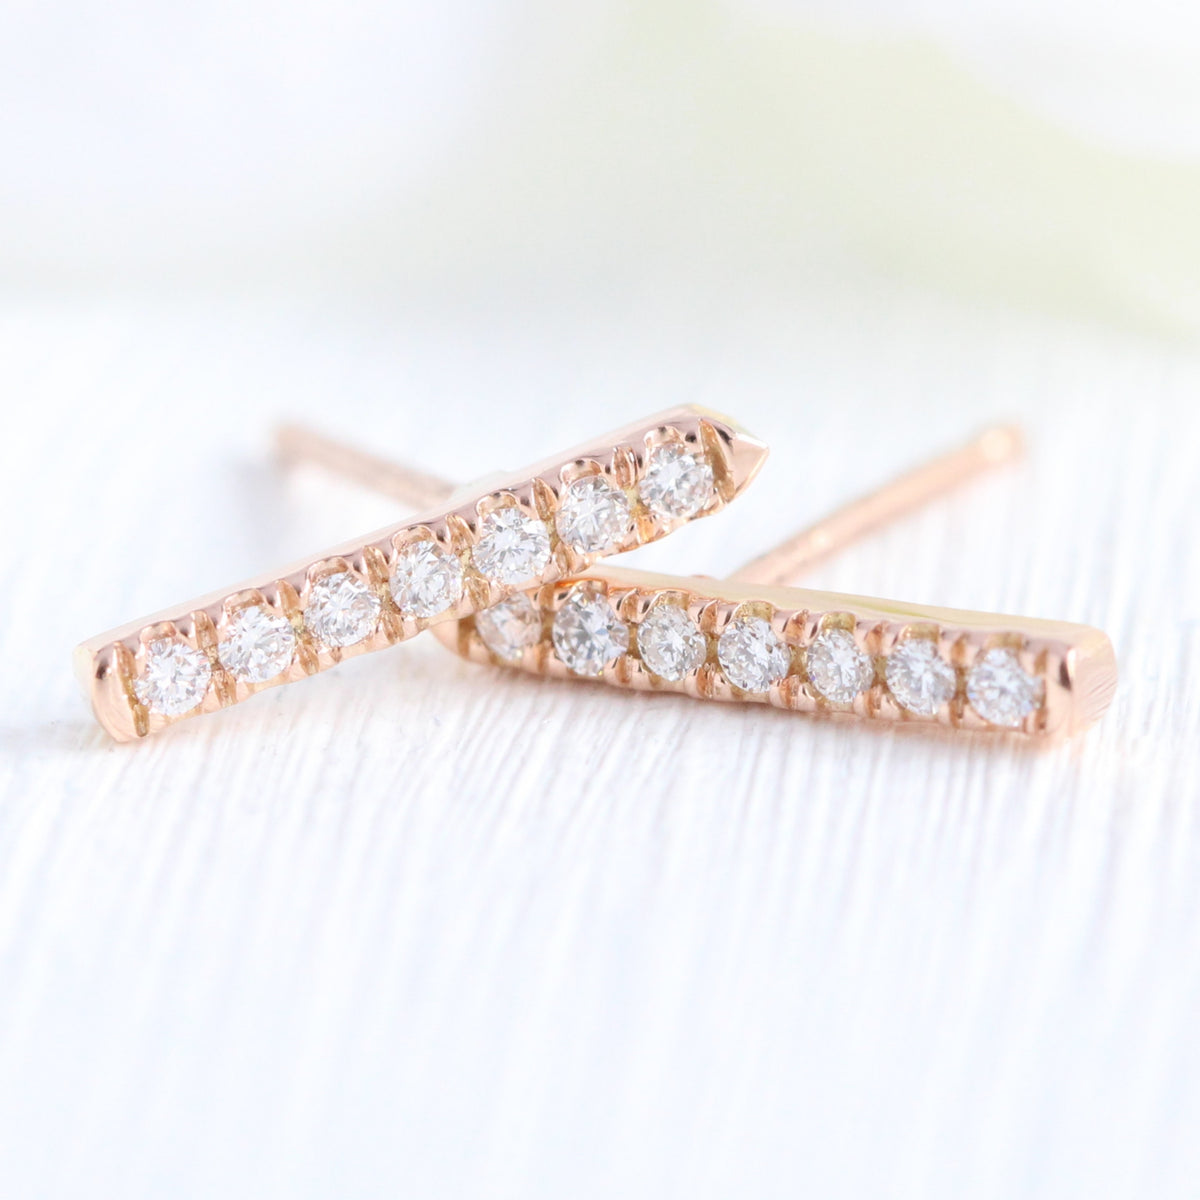 Curved Chevron Diamond Earrings Rose Gold Studs la more design jewelry